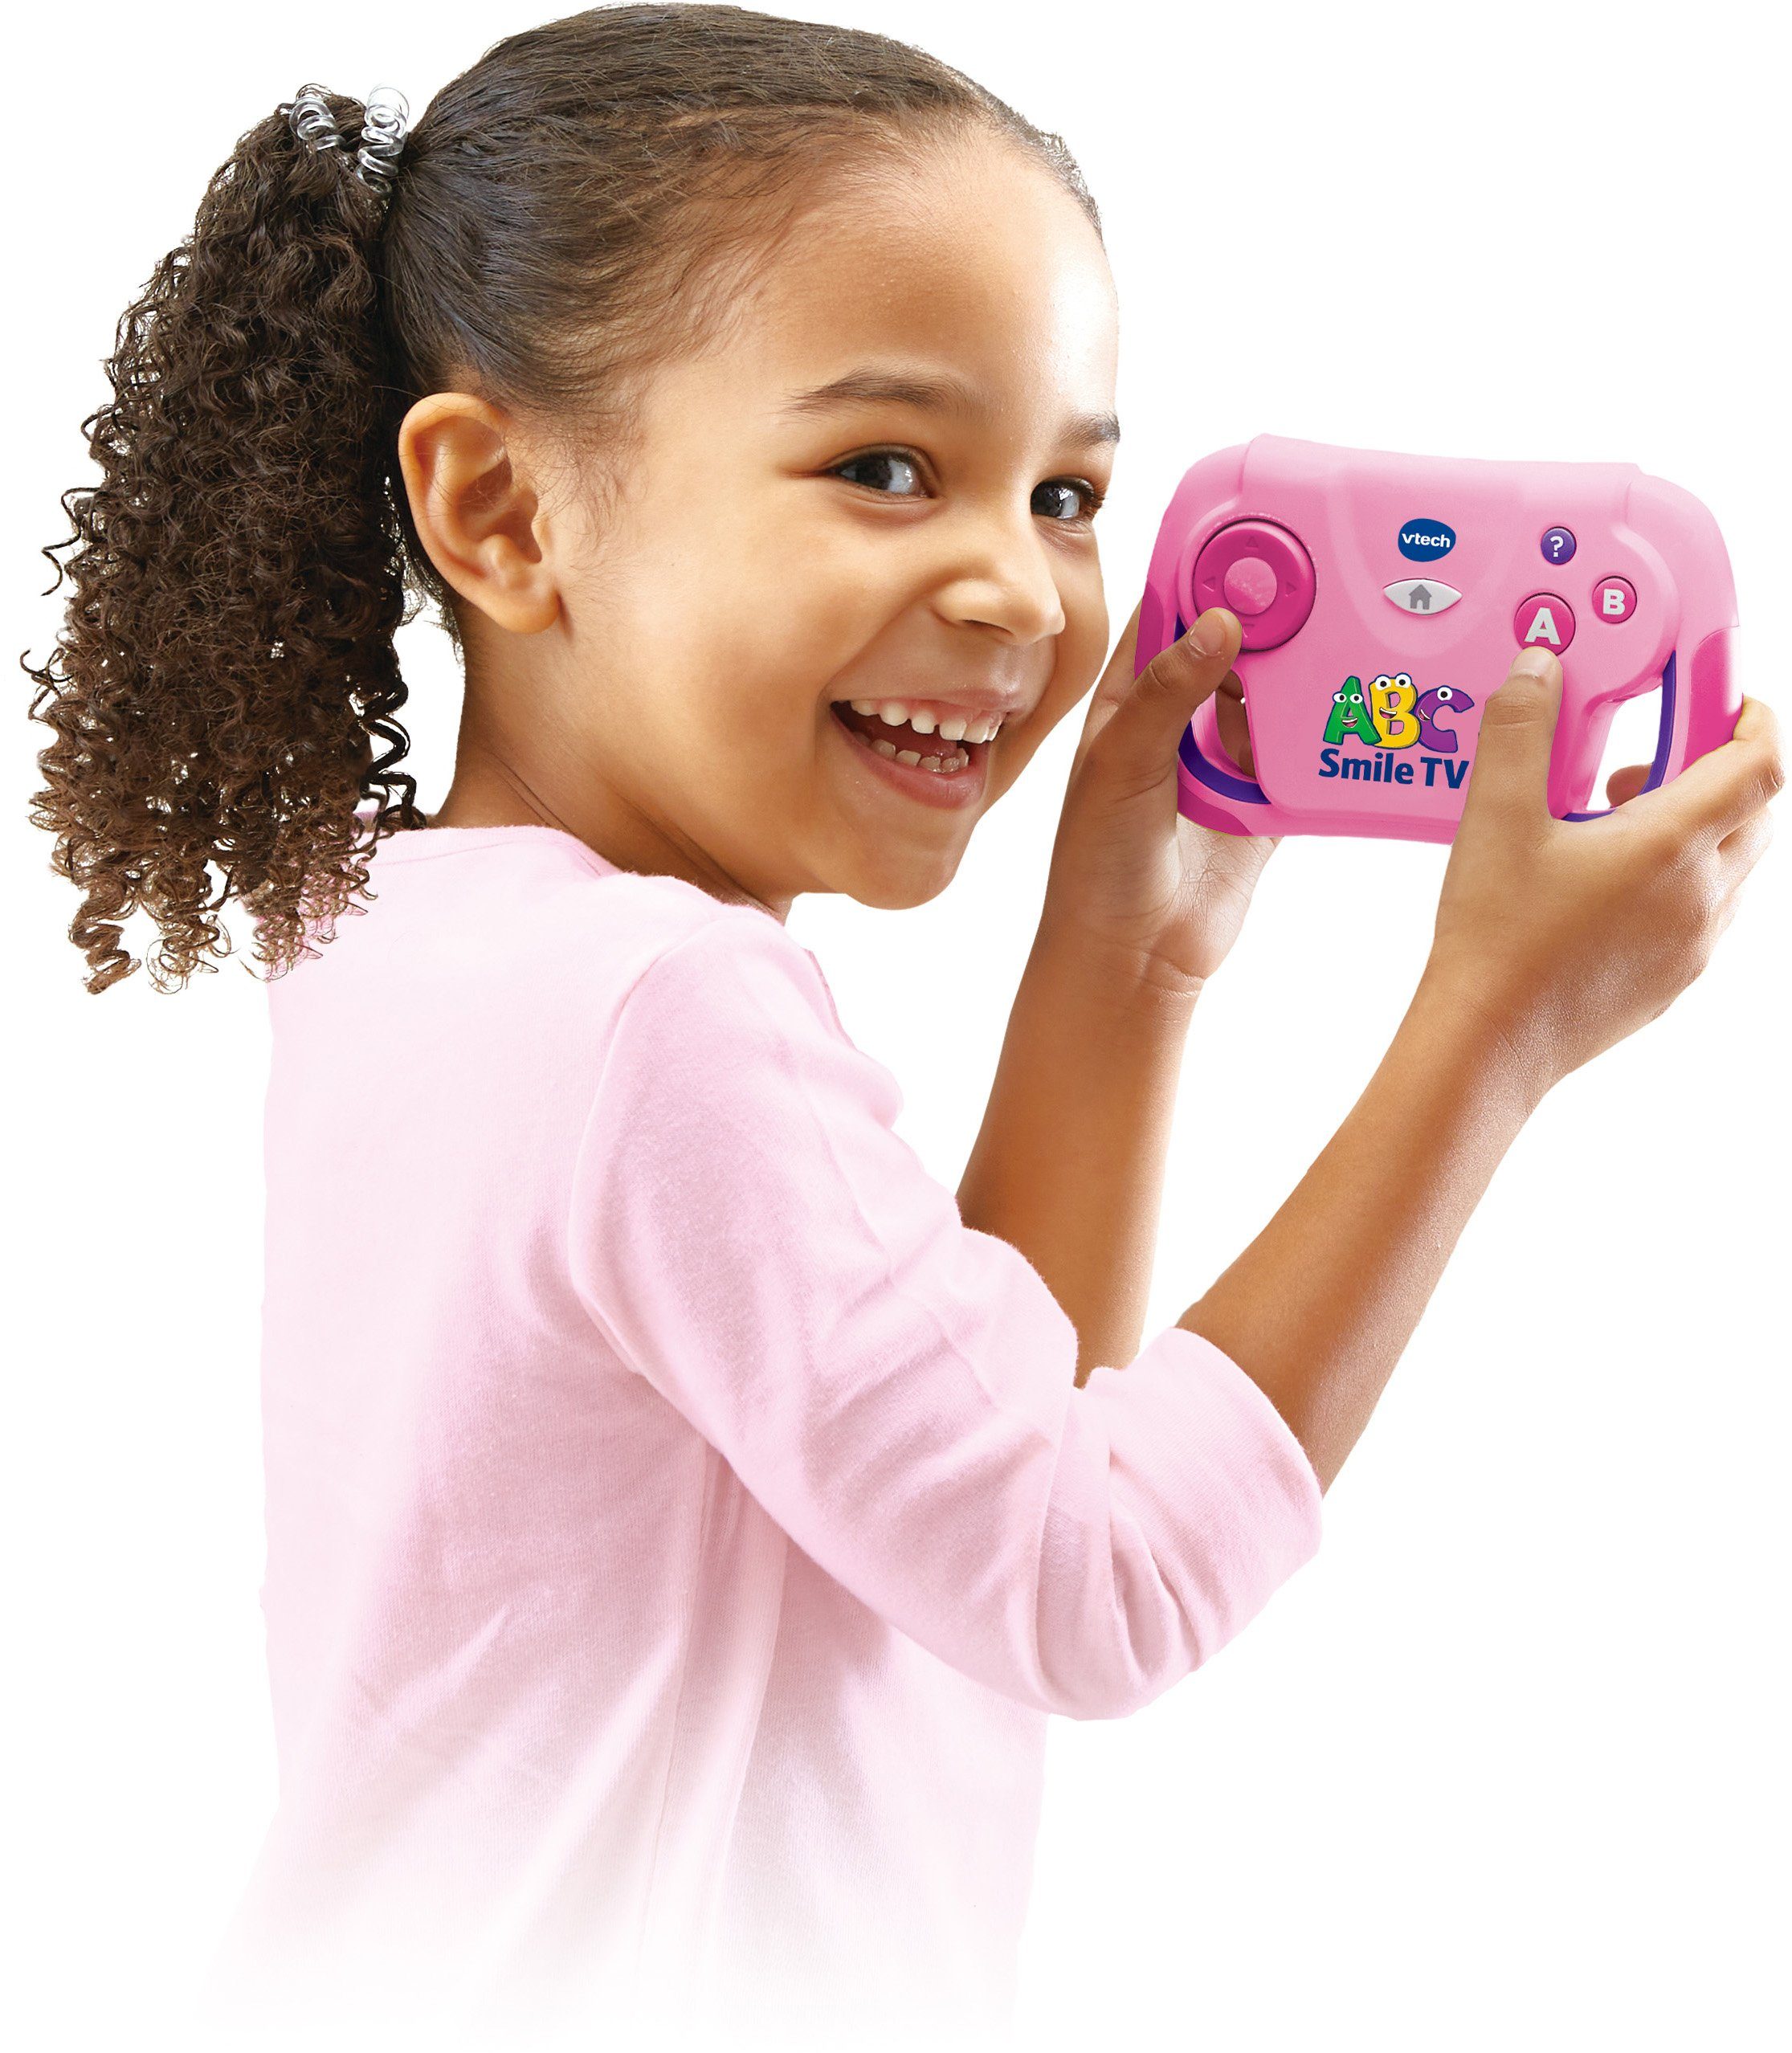 School, Ready TV, ABC Lernspielzeug Smile Vtech® Set pink